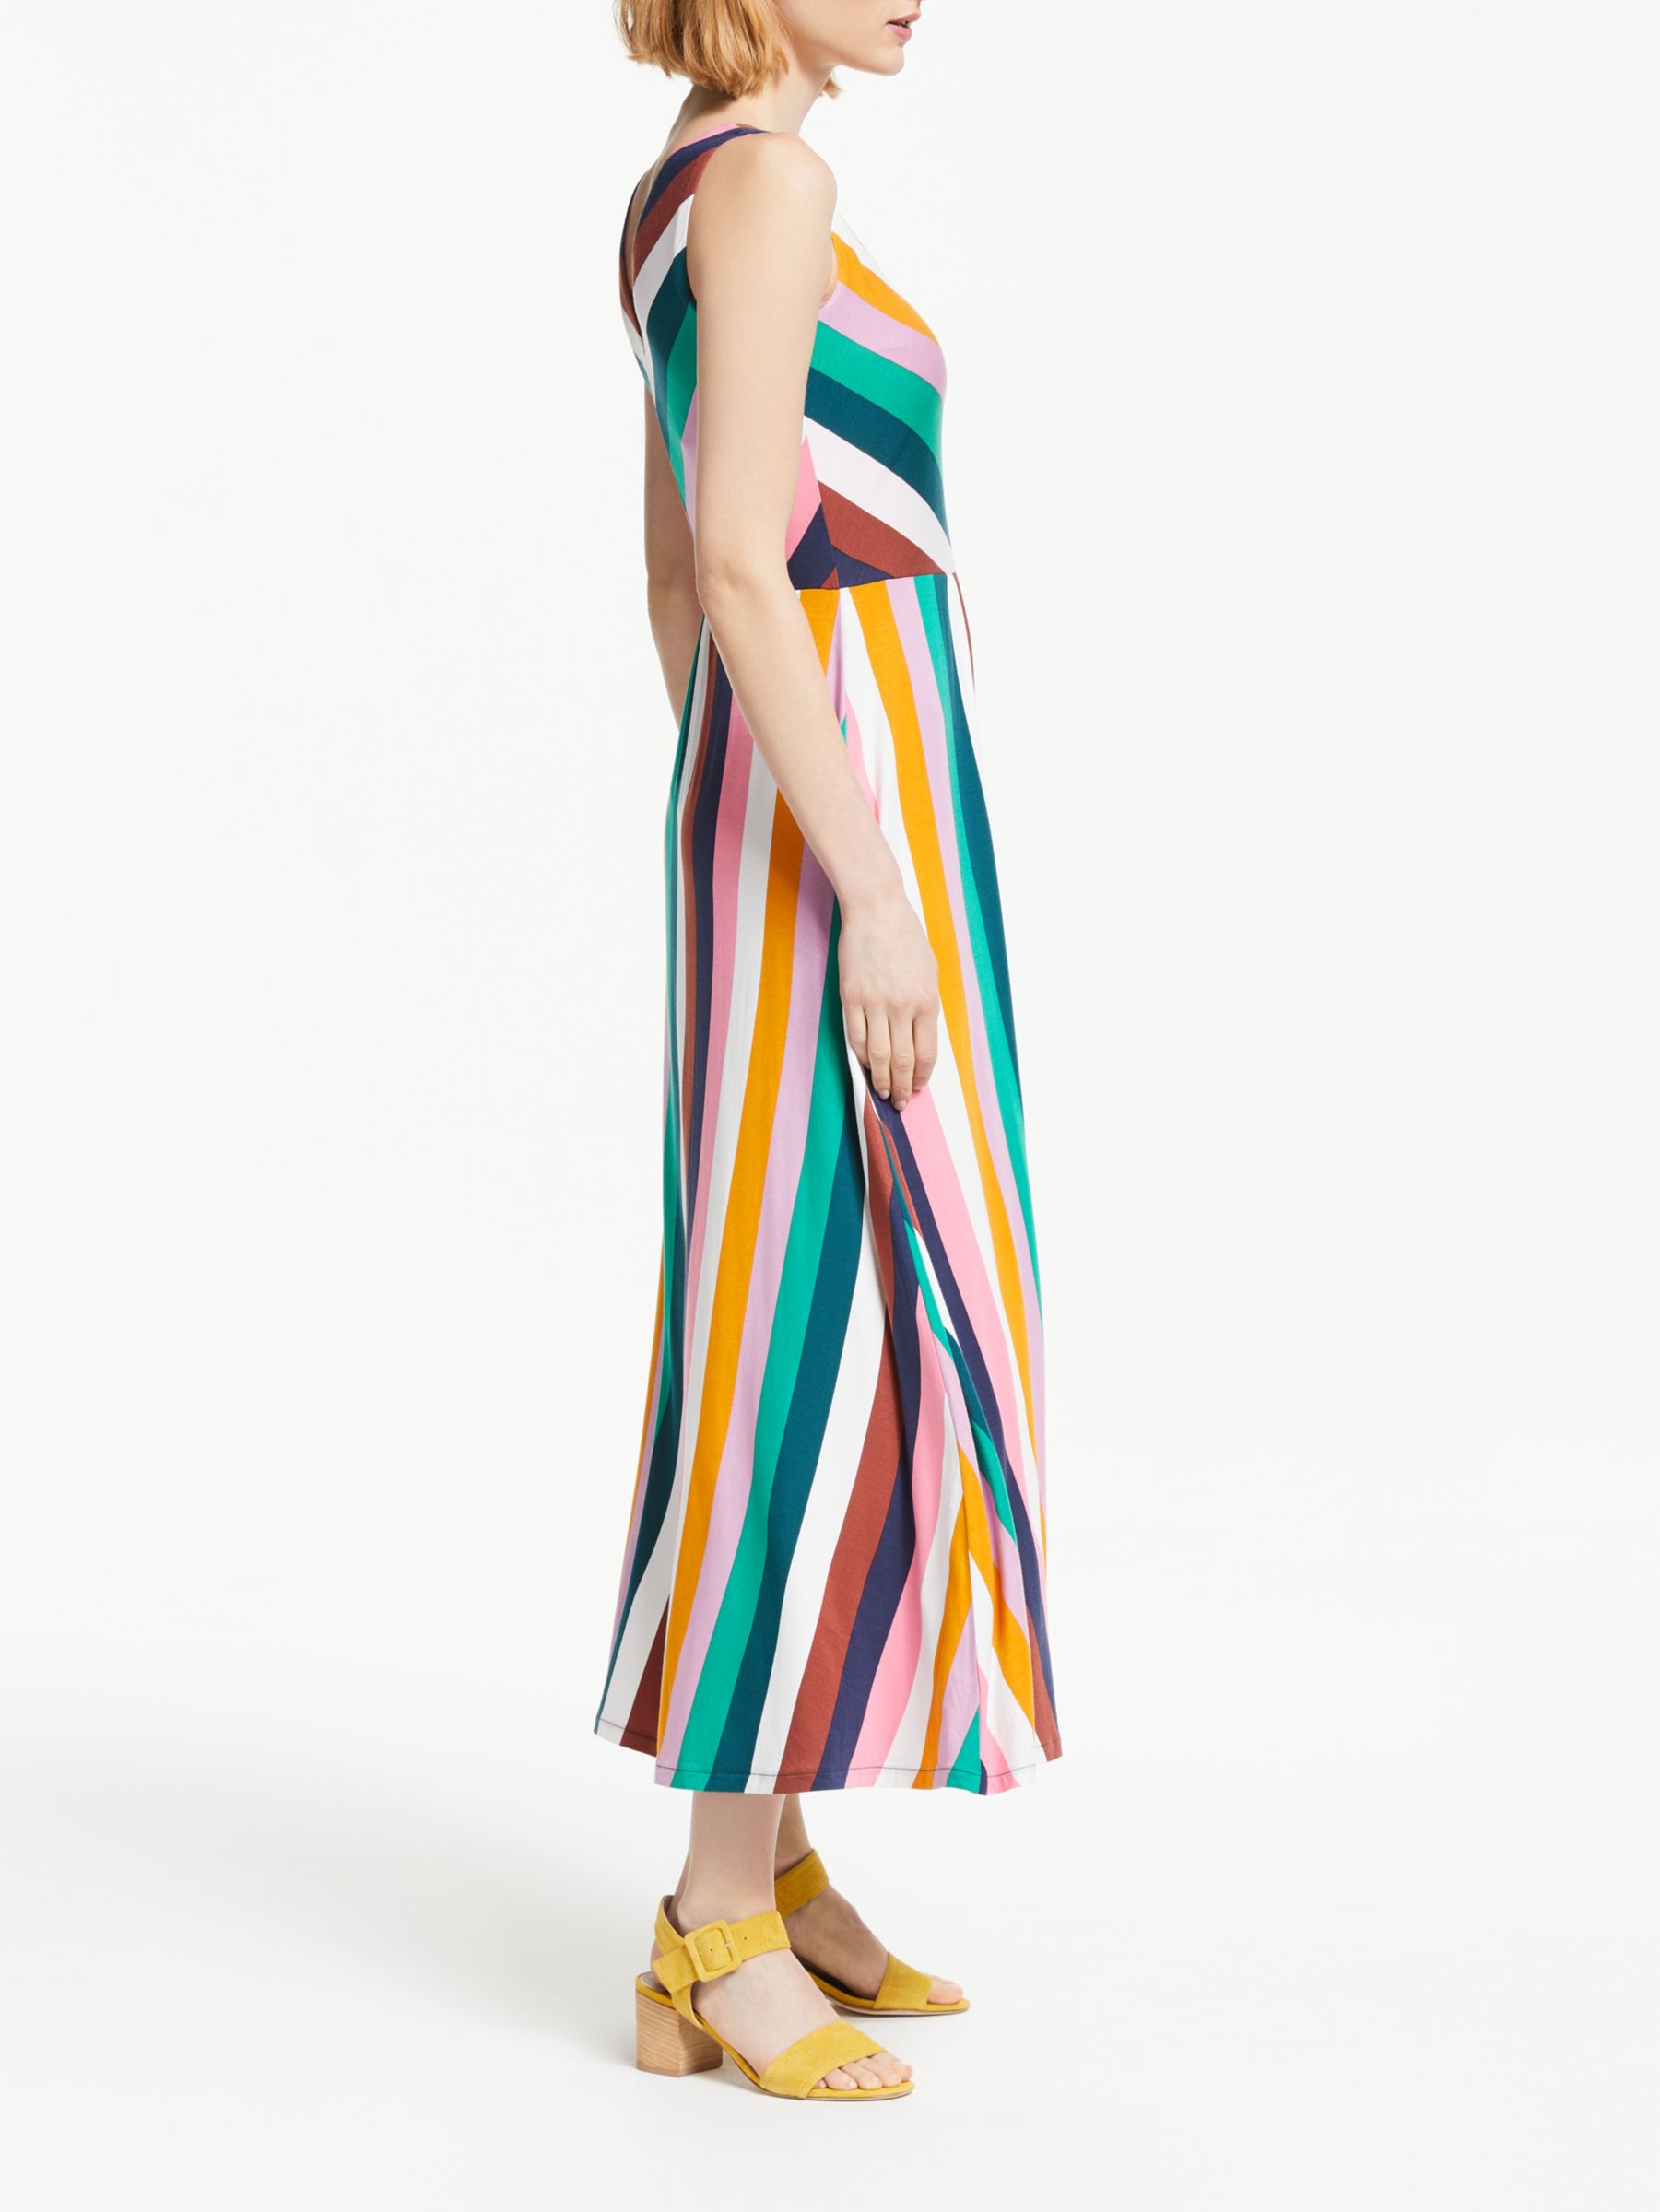 Boden Octavia Jersey Midi Dress, Multi, 8